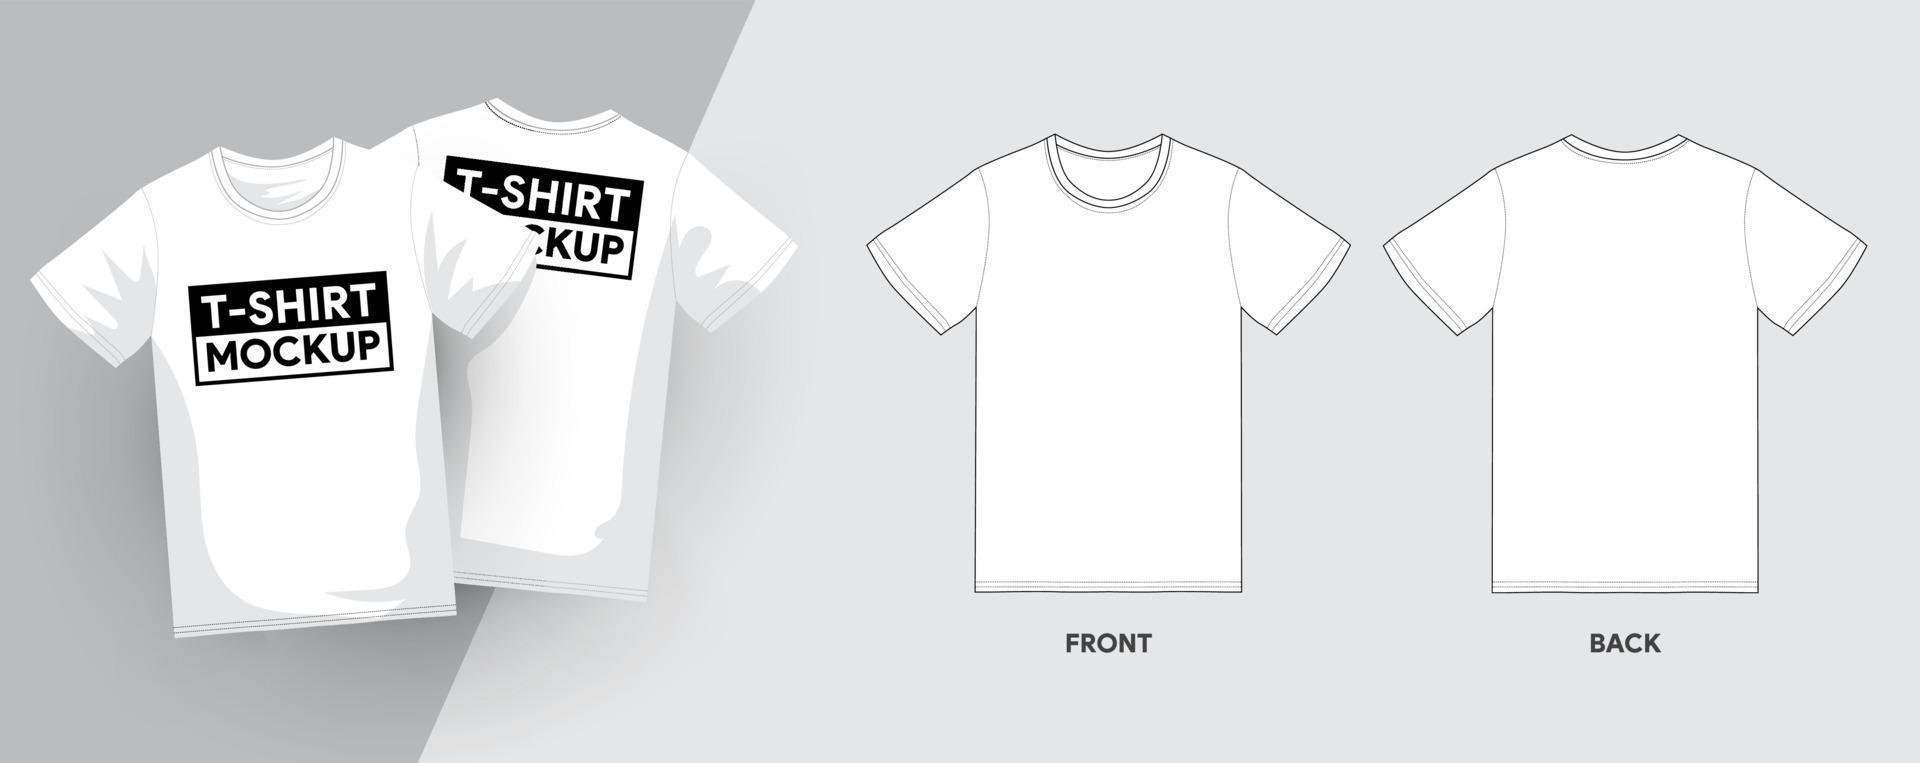 Apparel mockup graphic templates. T-shirt vector